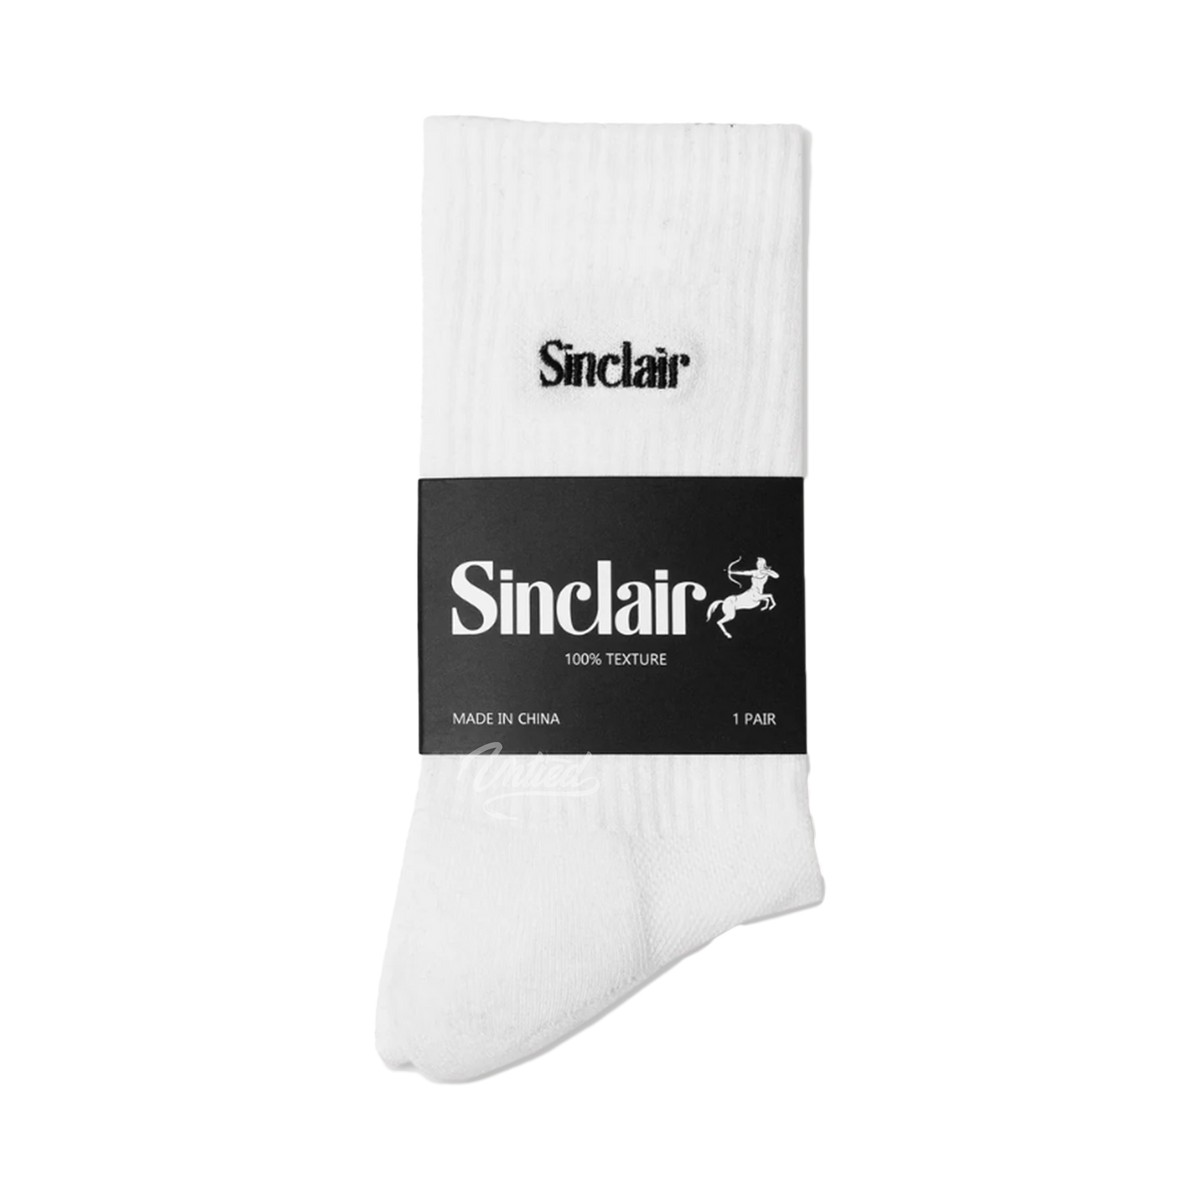 Sinclair Clairssential Socks "Black/White"